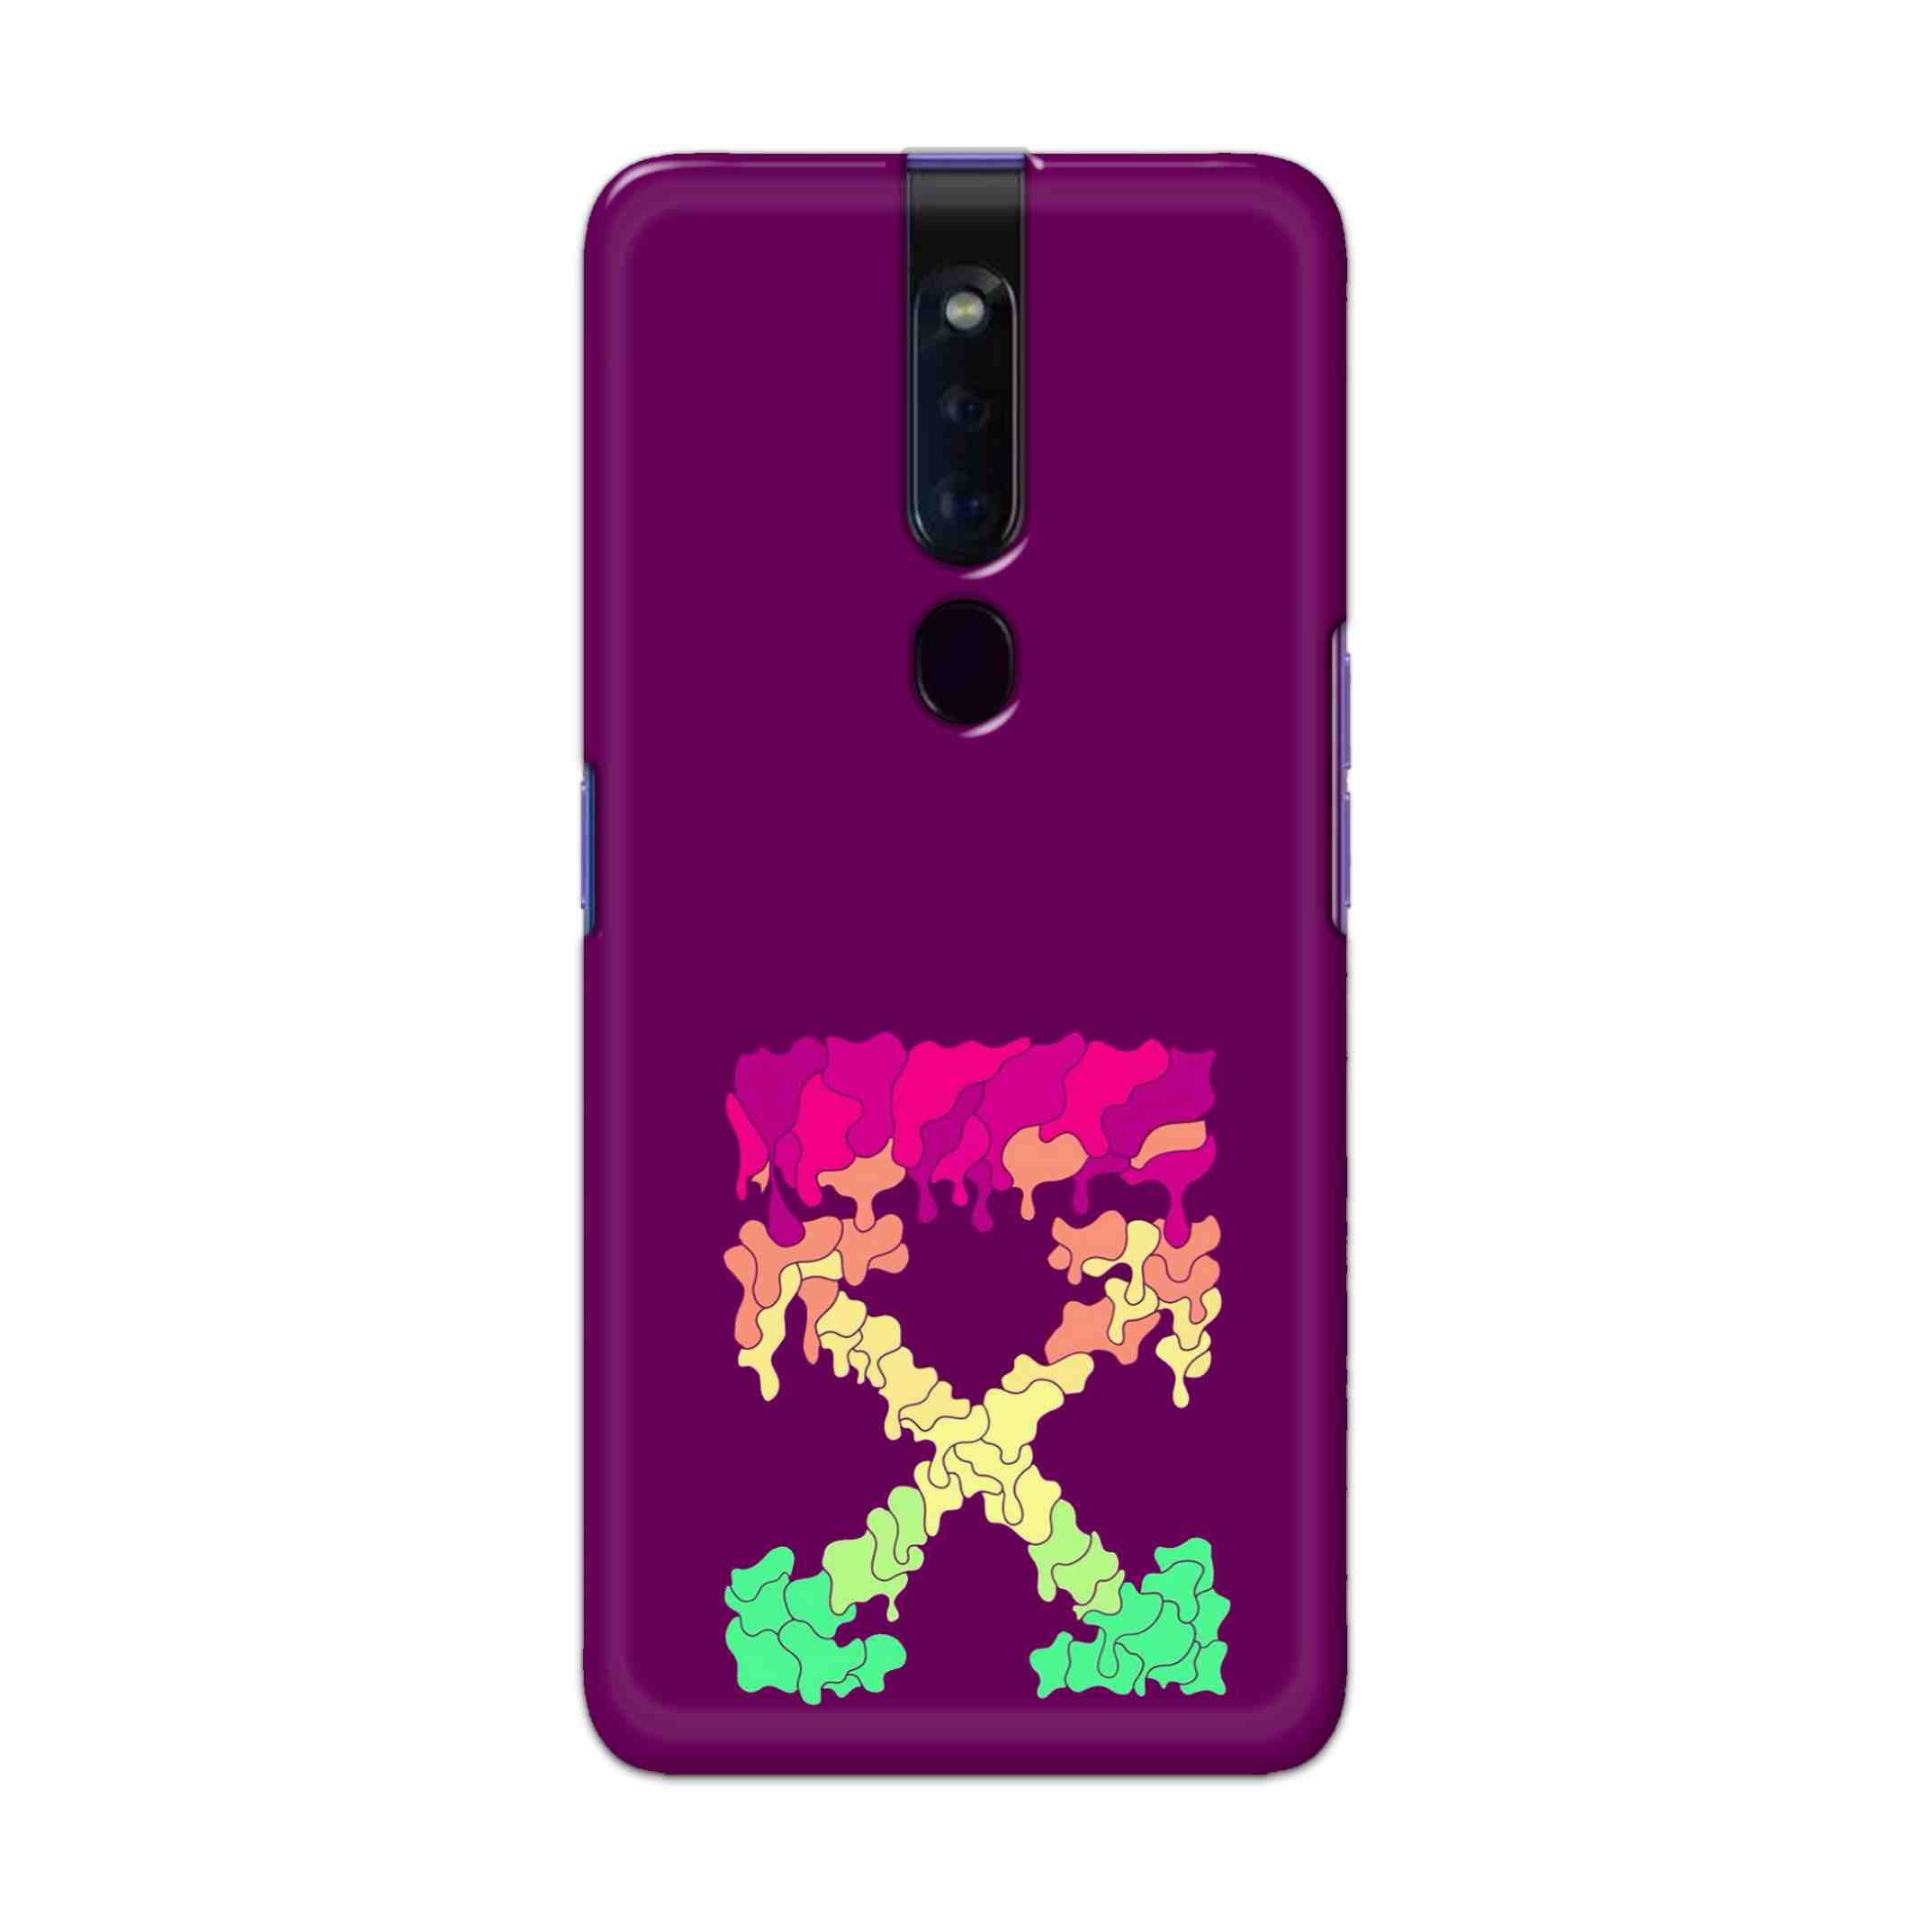 Buy X.O Hard Back Mobile Phone Case Cover For Oppo F11 Pro Online